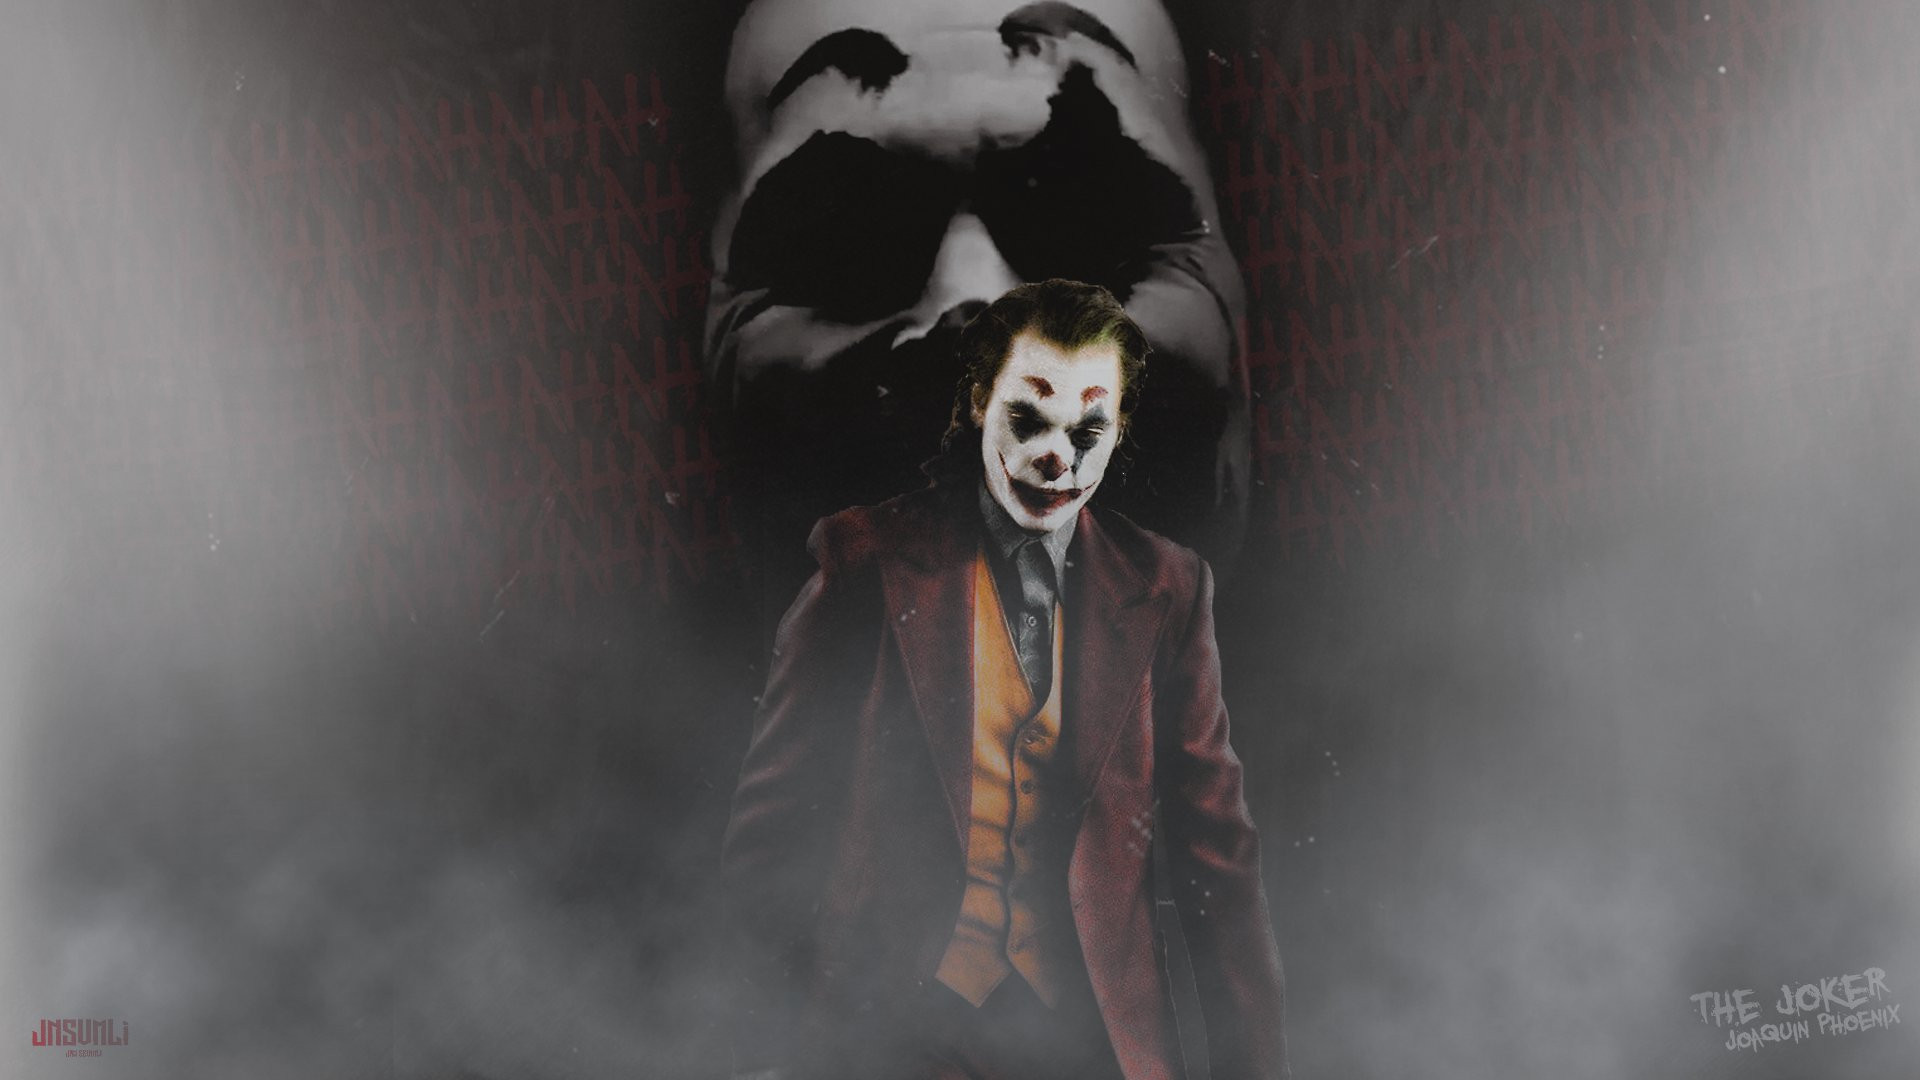 4K Joaquin Phoenix As Joker Wallpapers